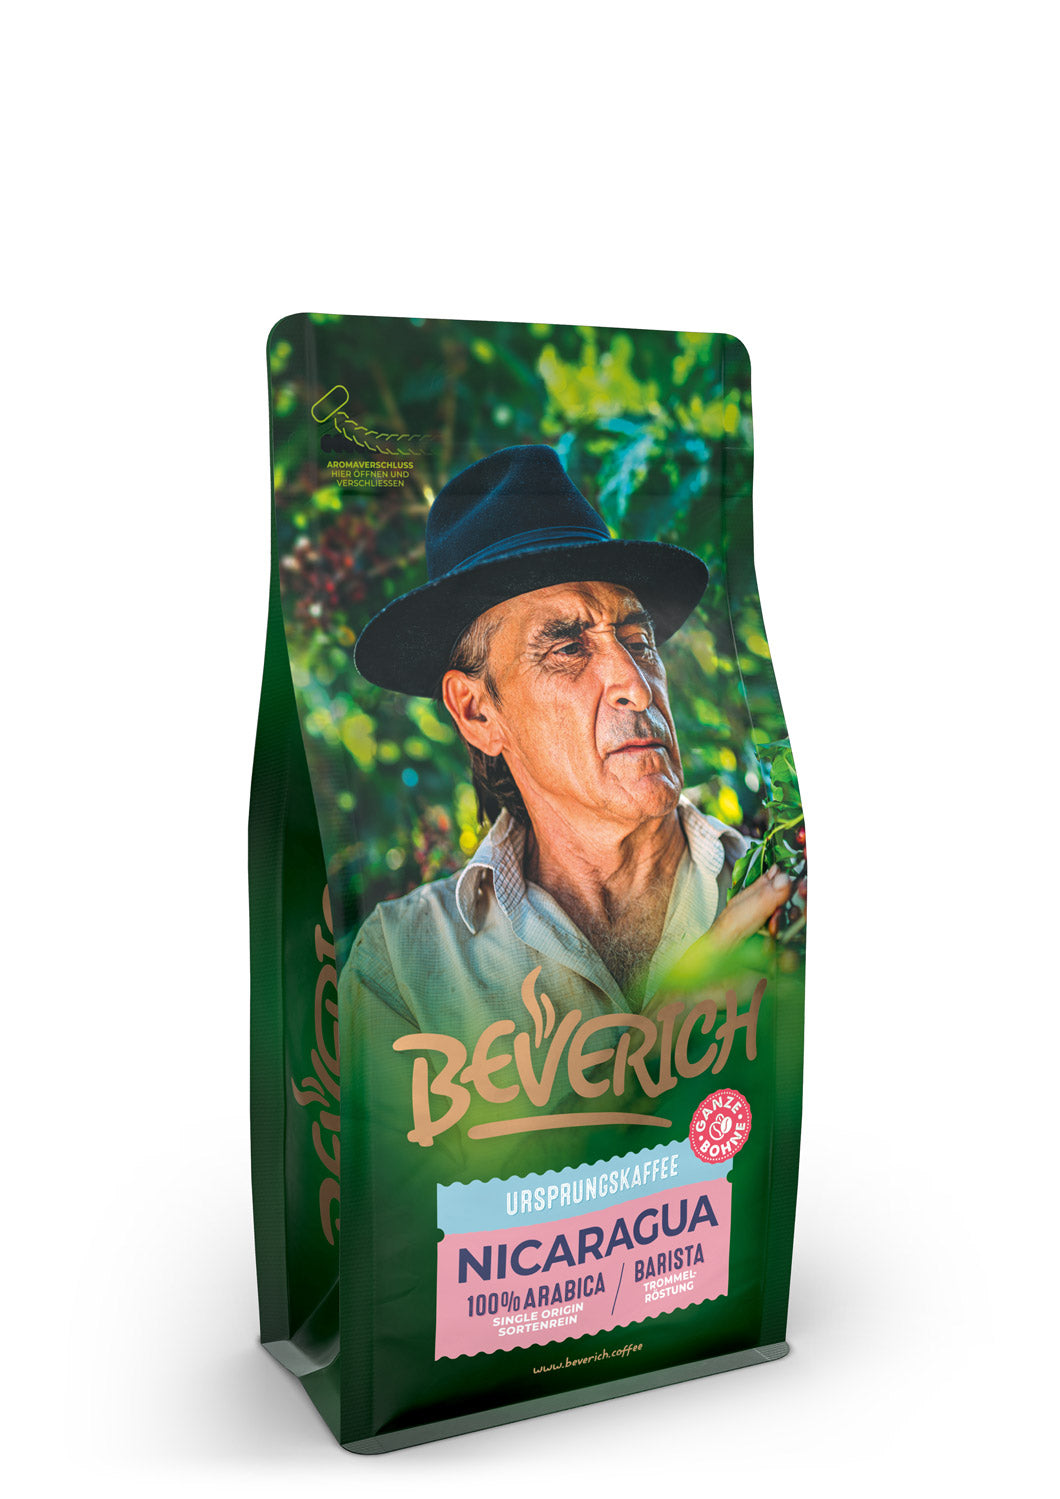 BEVERICH - Ursprungskaffee "Nicaragua" (250g)